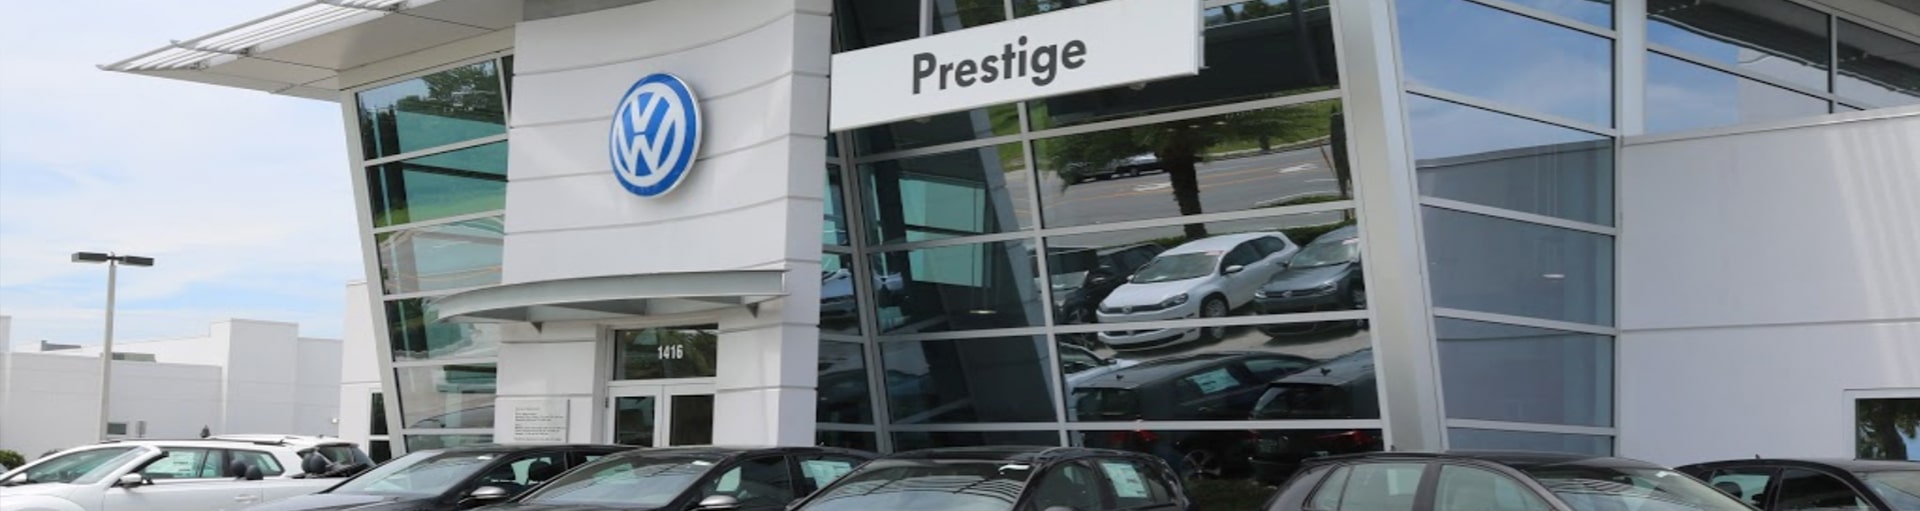 Prestige Volkswagen of Melbourne Four-Wheel Alignment